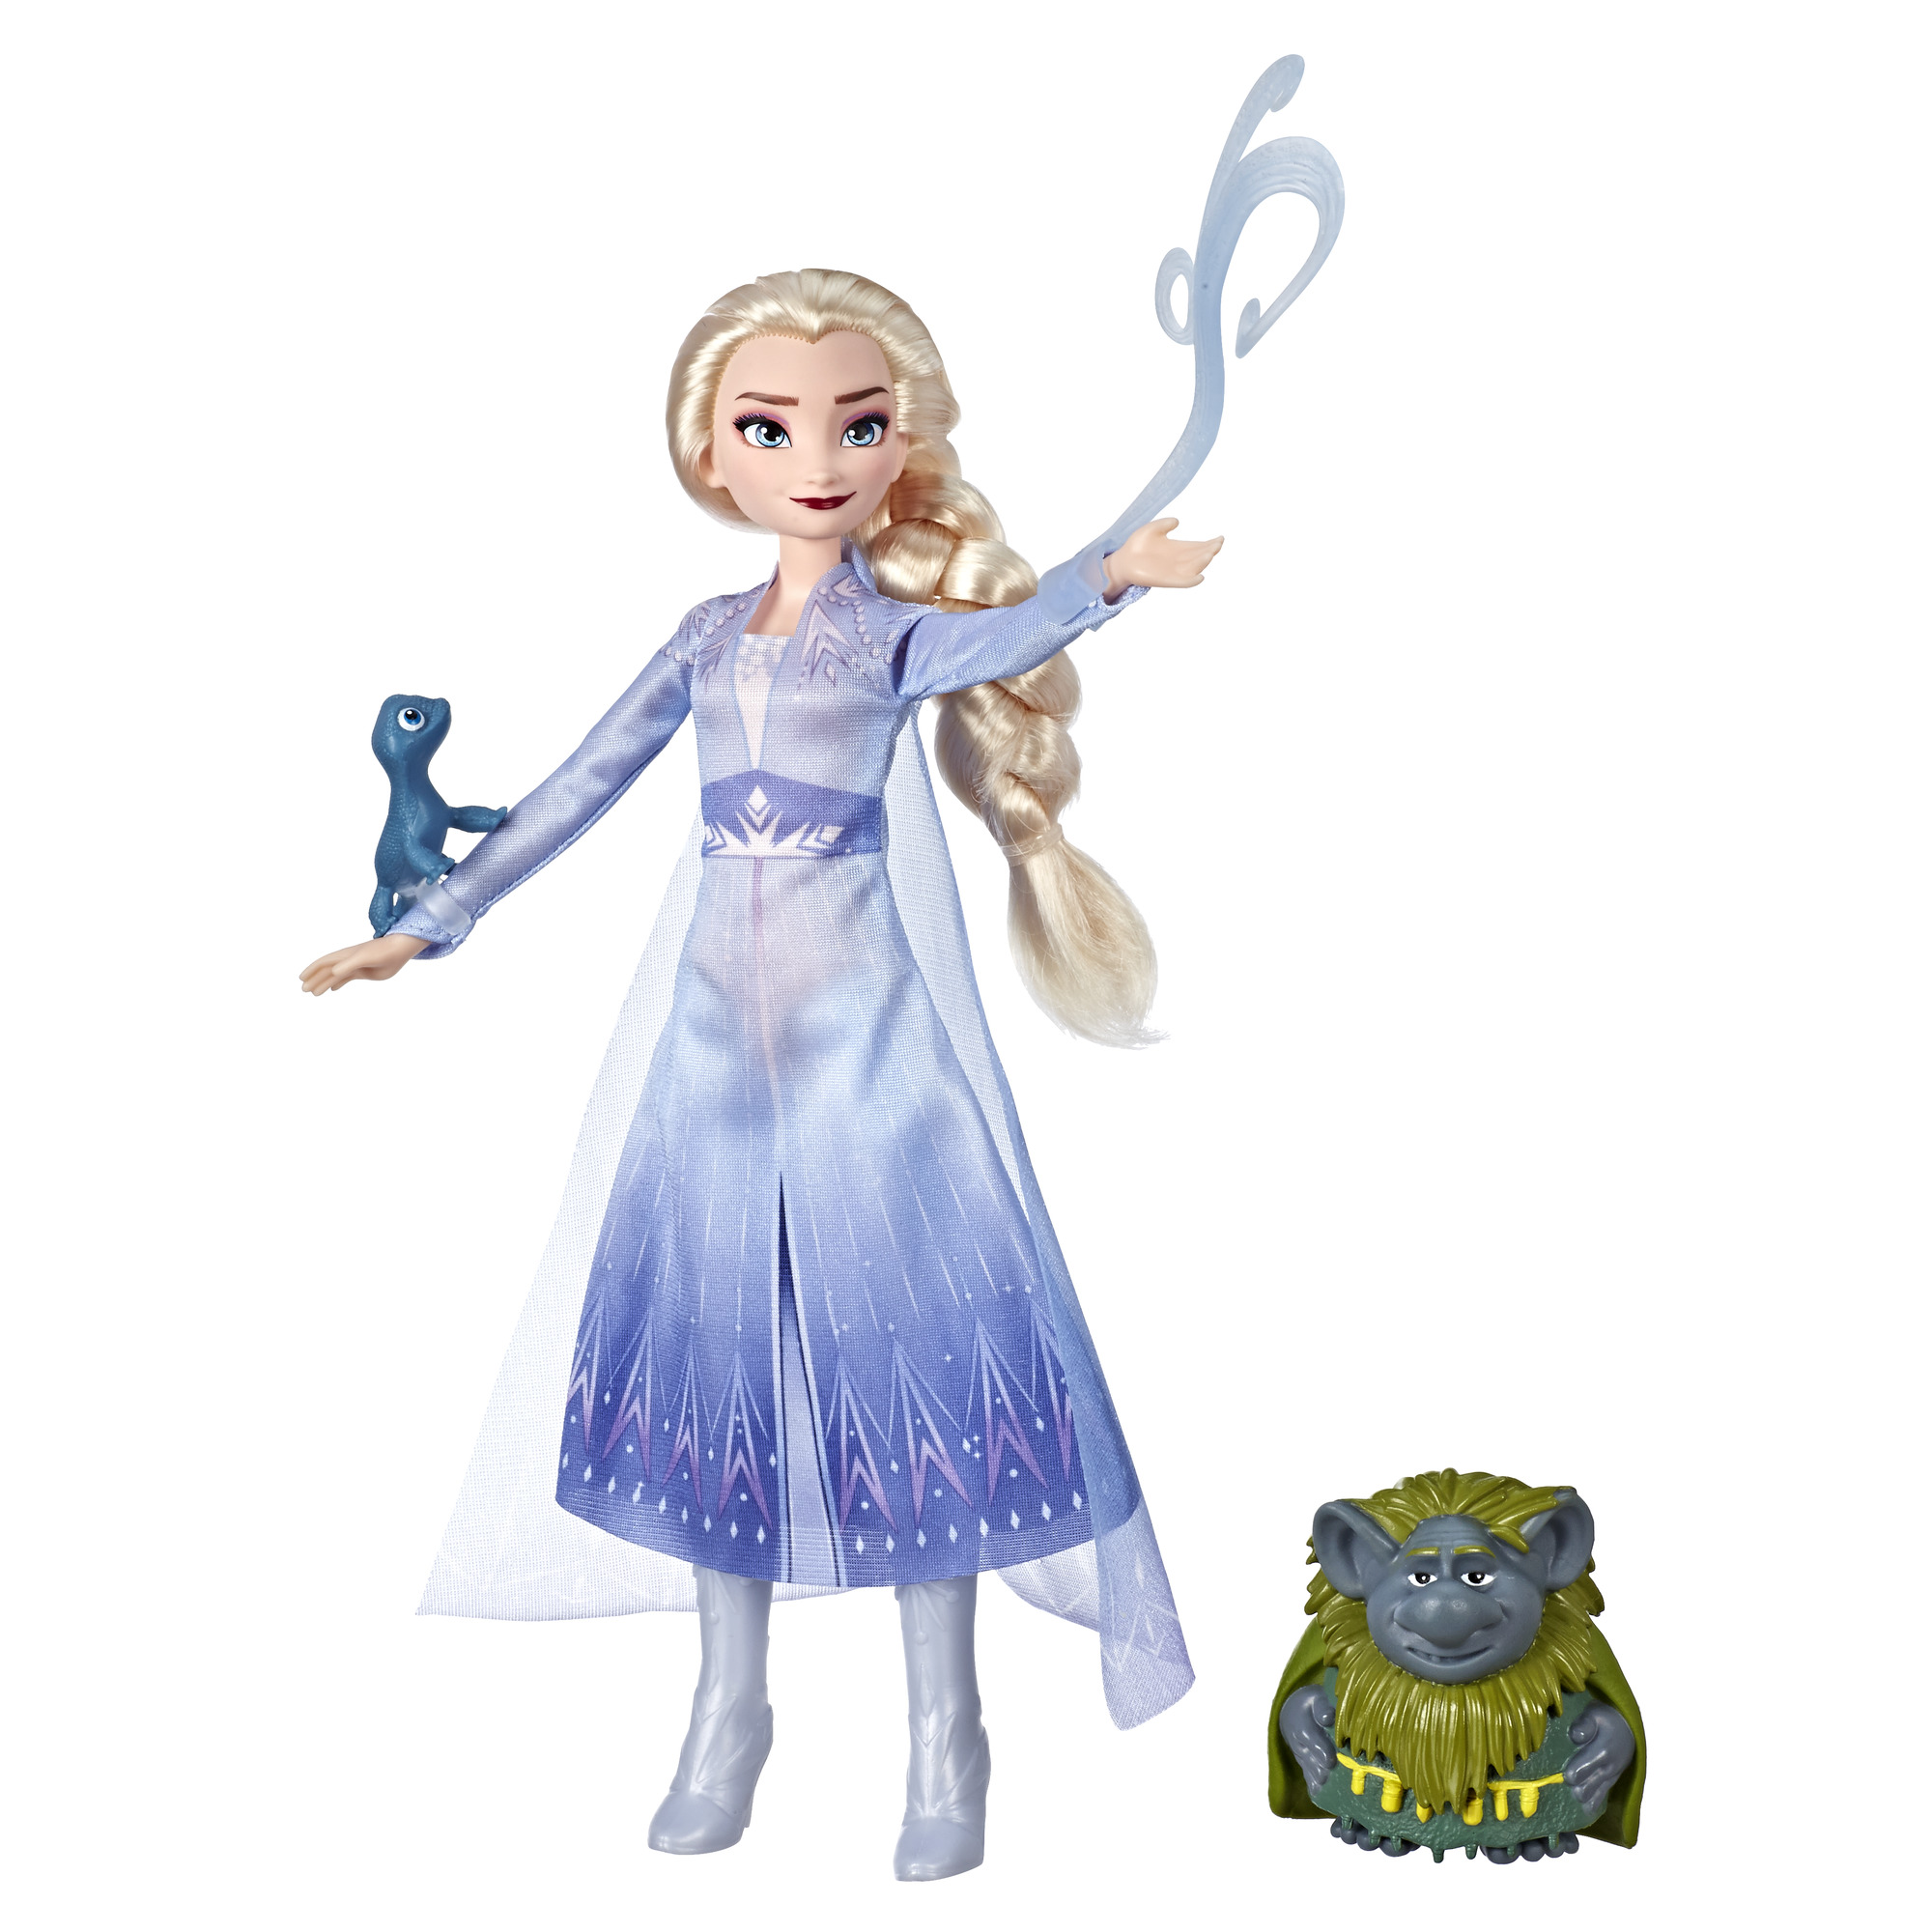 Disney Frozen 2 Elsa Fashion Pabbie and Salamander Doll Playset, Inspiredby Frozen 2 - image 1 of 6